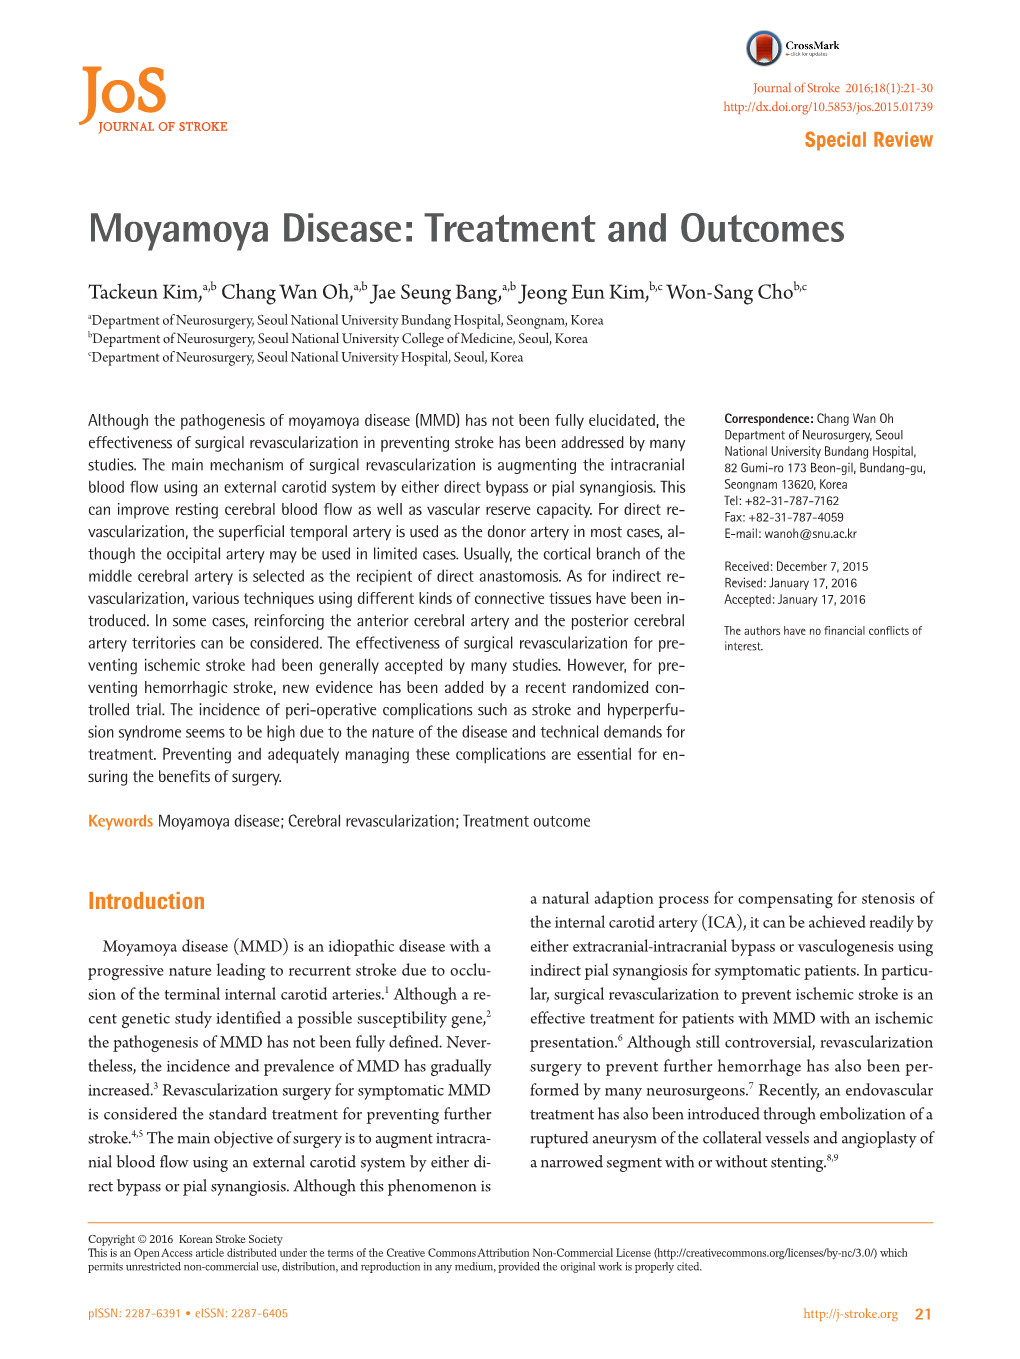 Moyamoya Disease: Treatment and Outcomes